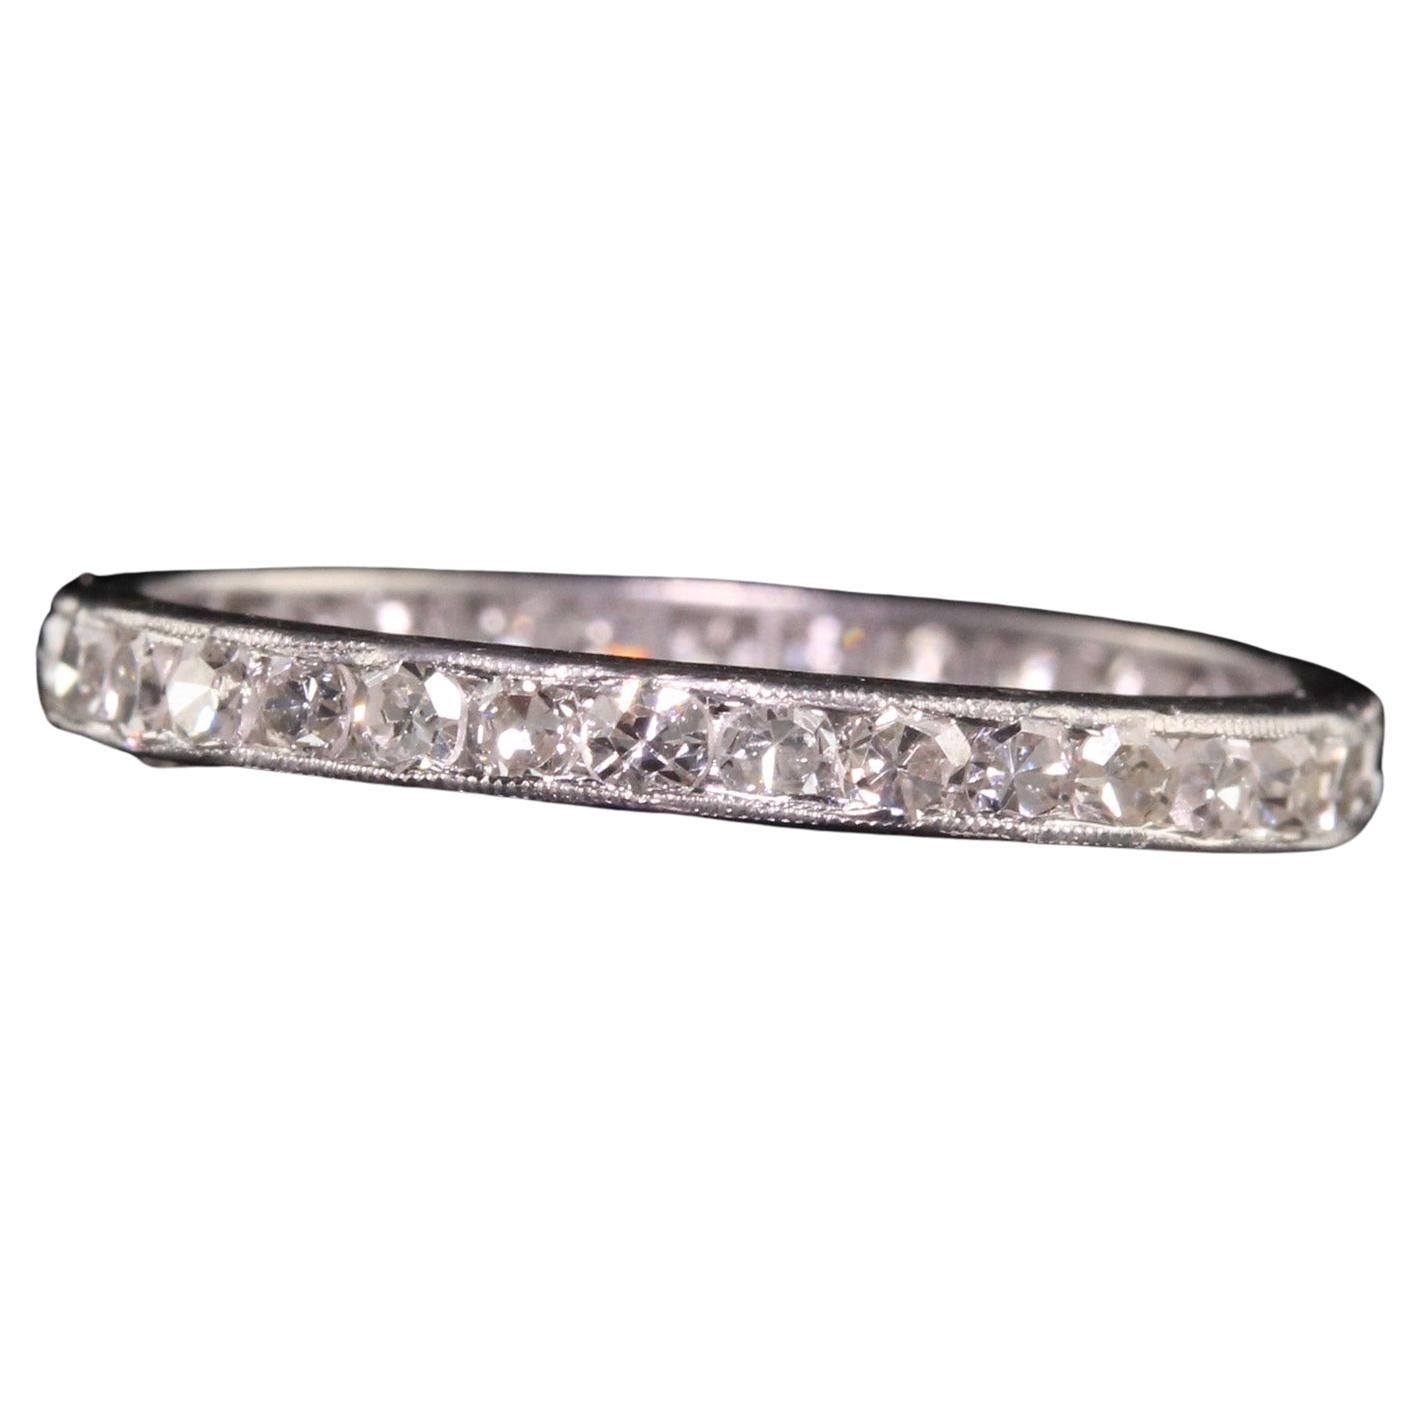 1927 Elegant Art Deco French Cut Diamond Platinum Wedding Band Ring at ...